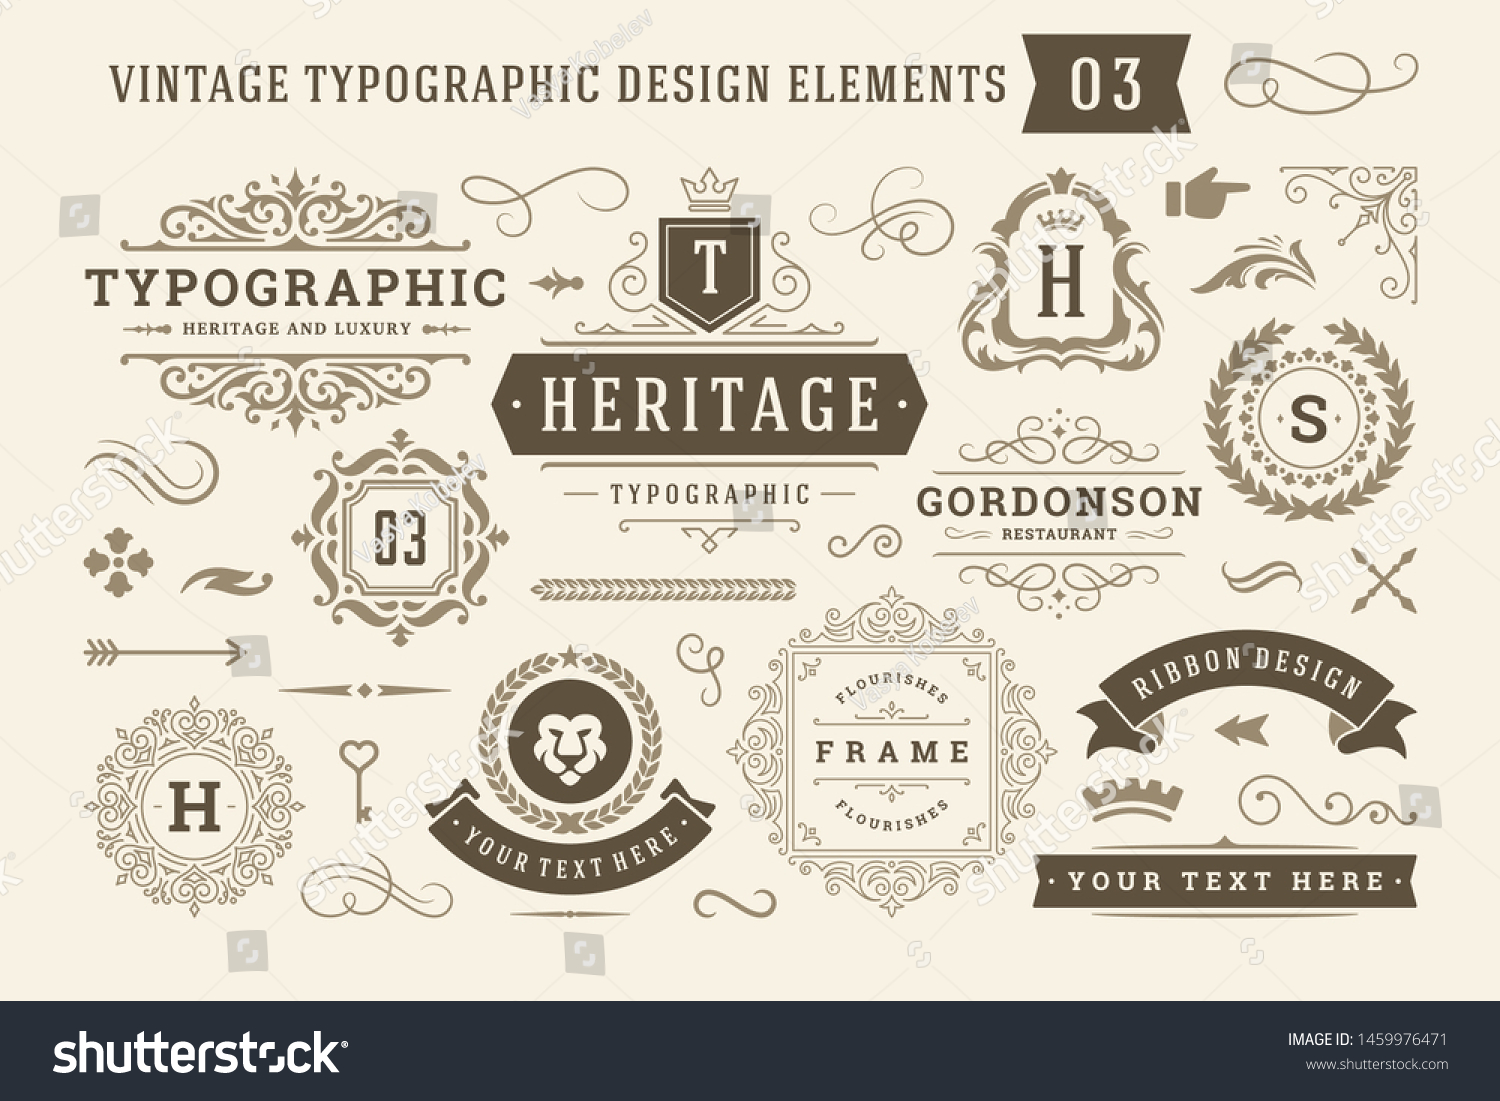 Vintage typographic design elements set vector illustration. Labels and badges, retro ribbons, luxury ornate logo symbols, calligraphic swirls, flourishes ornament vignettes and other. #1459976471